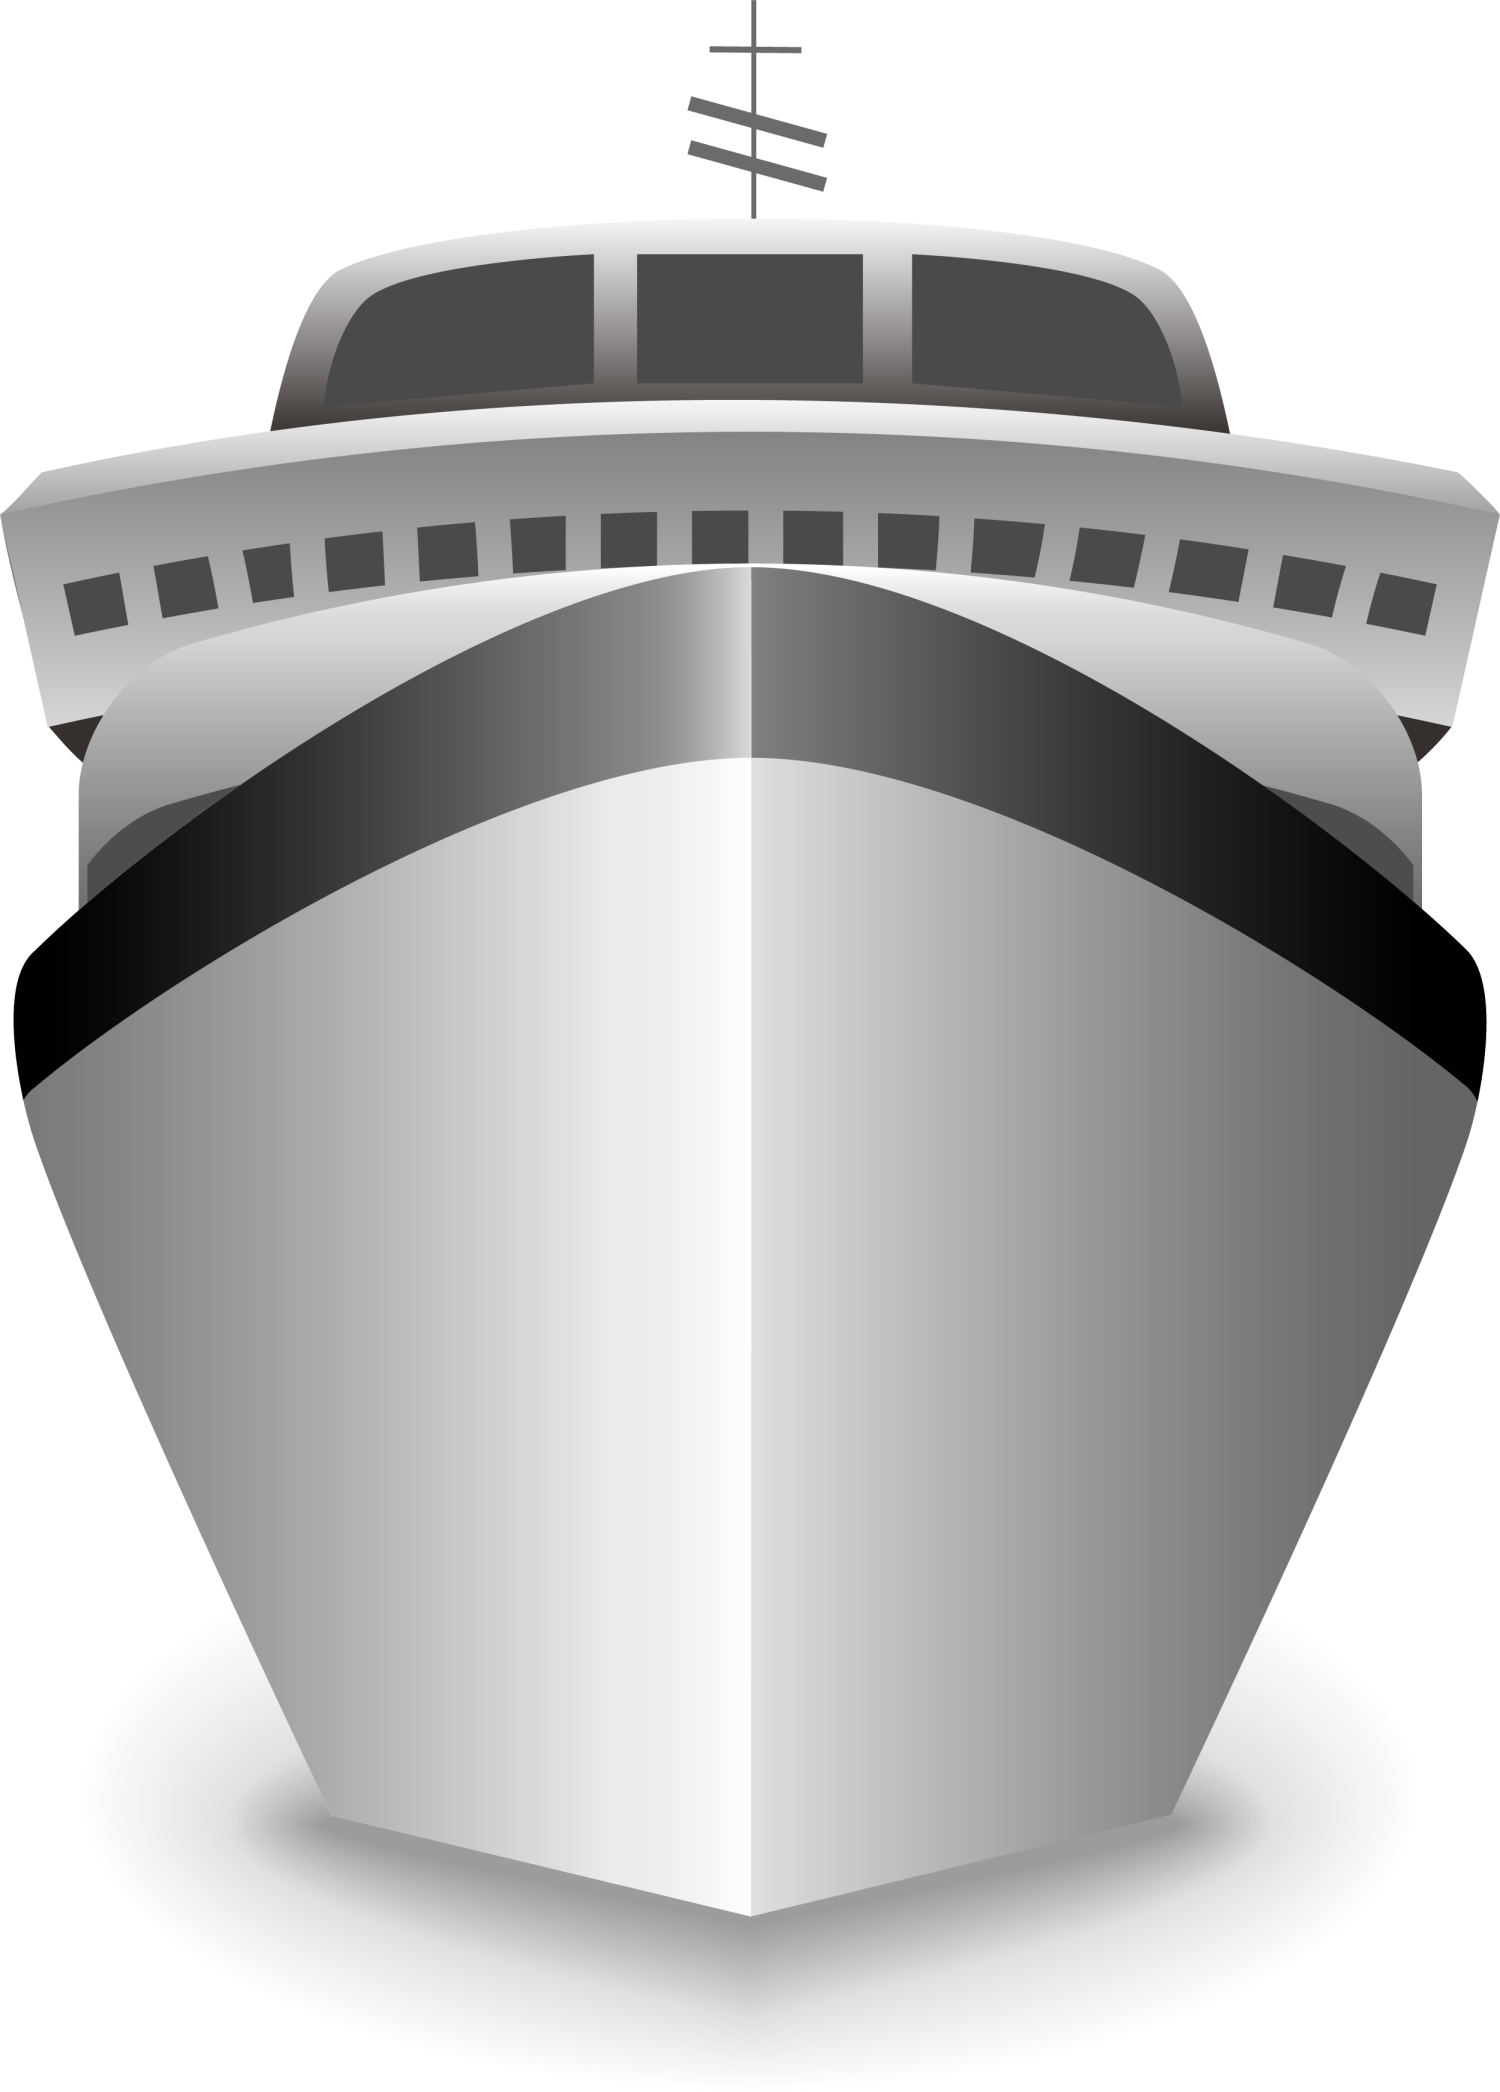 cruise clipart ship indian navy